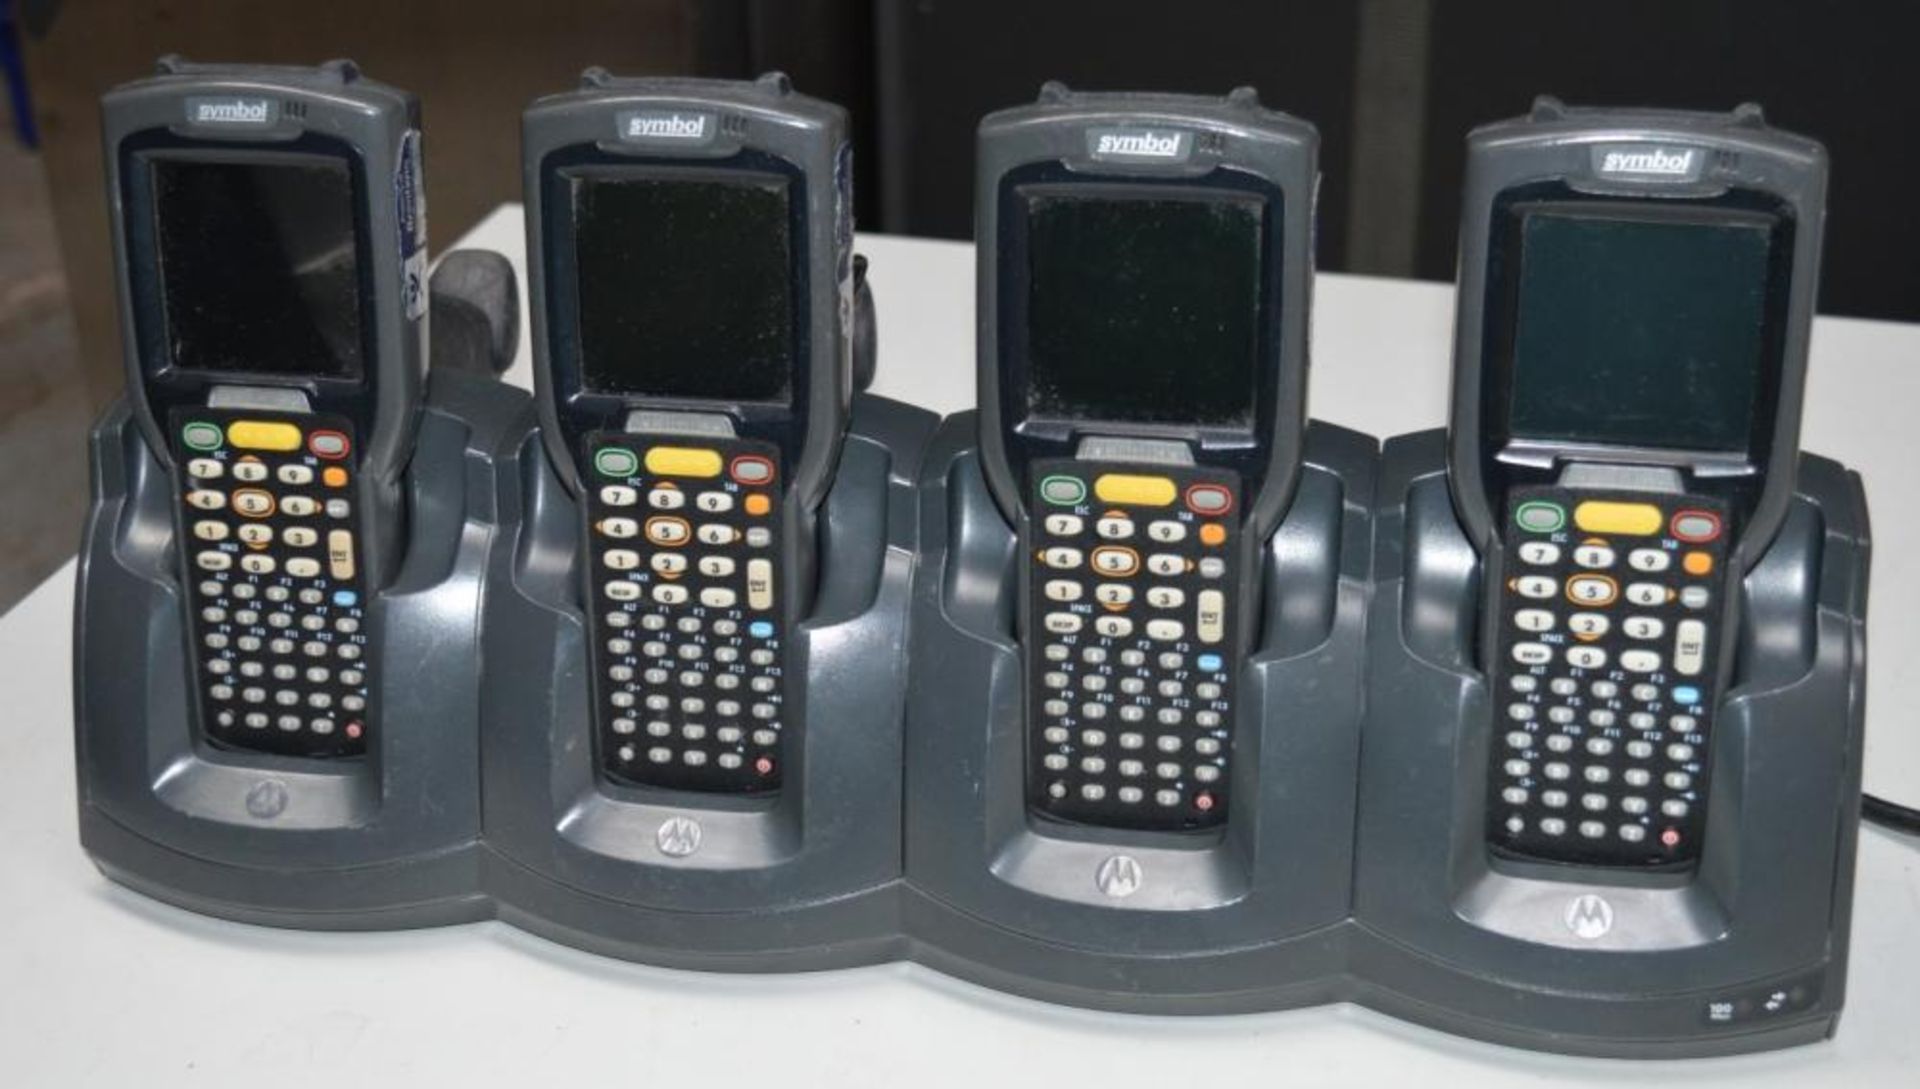 4 x Motorola Symbol MC3090 Handheld Barcode Scanners - Mobile Computer PDA - Includes Charging Dock, - Image 5 of 7